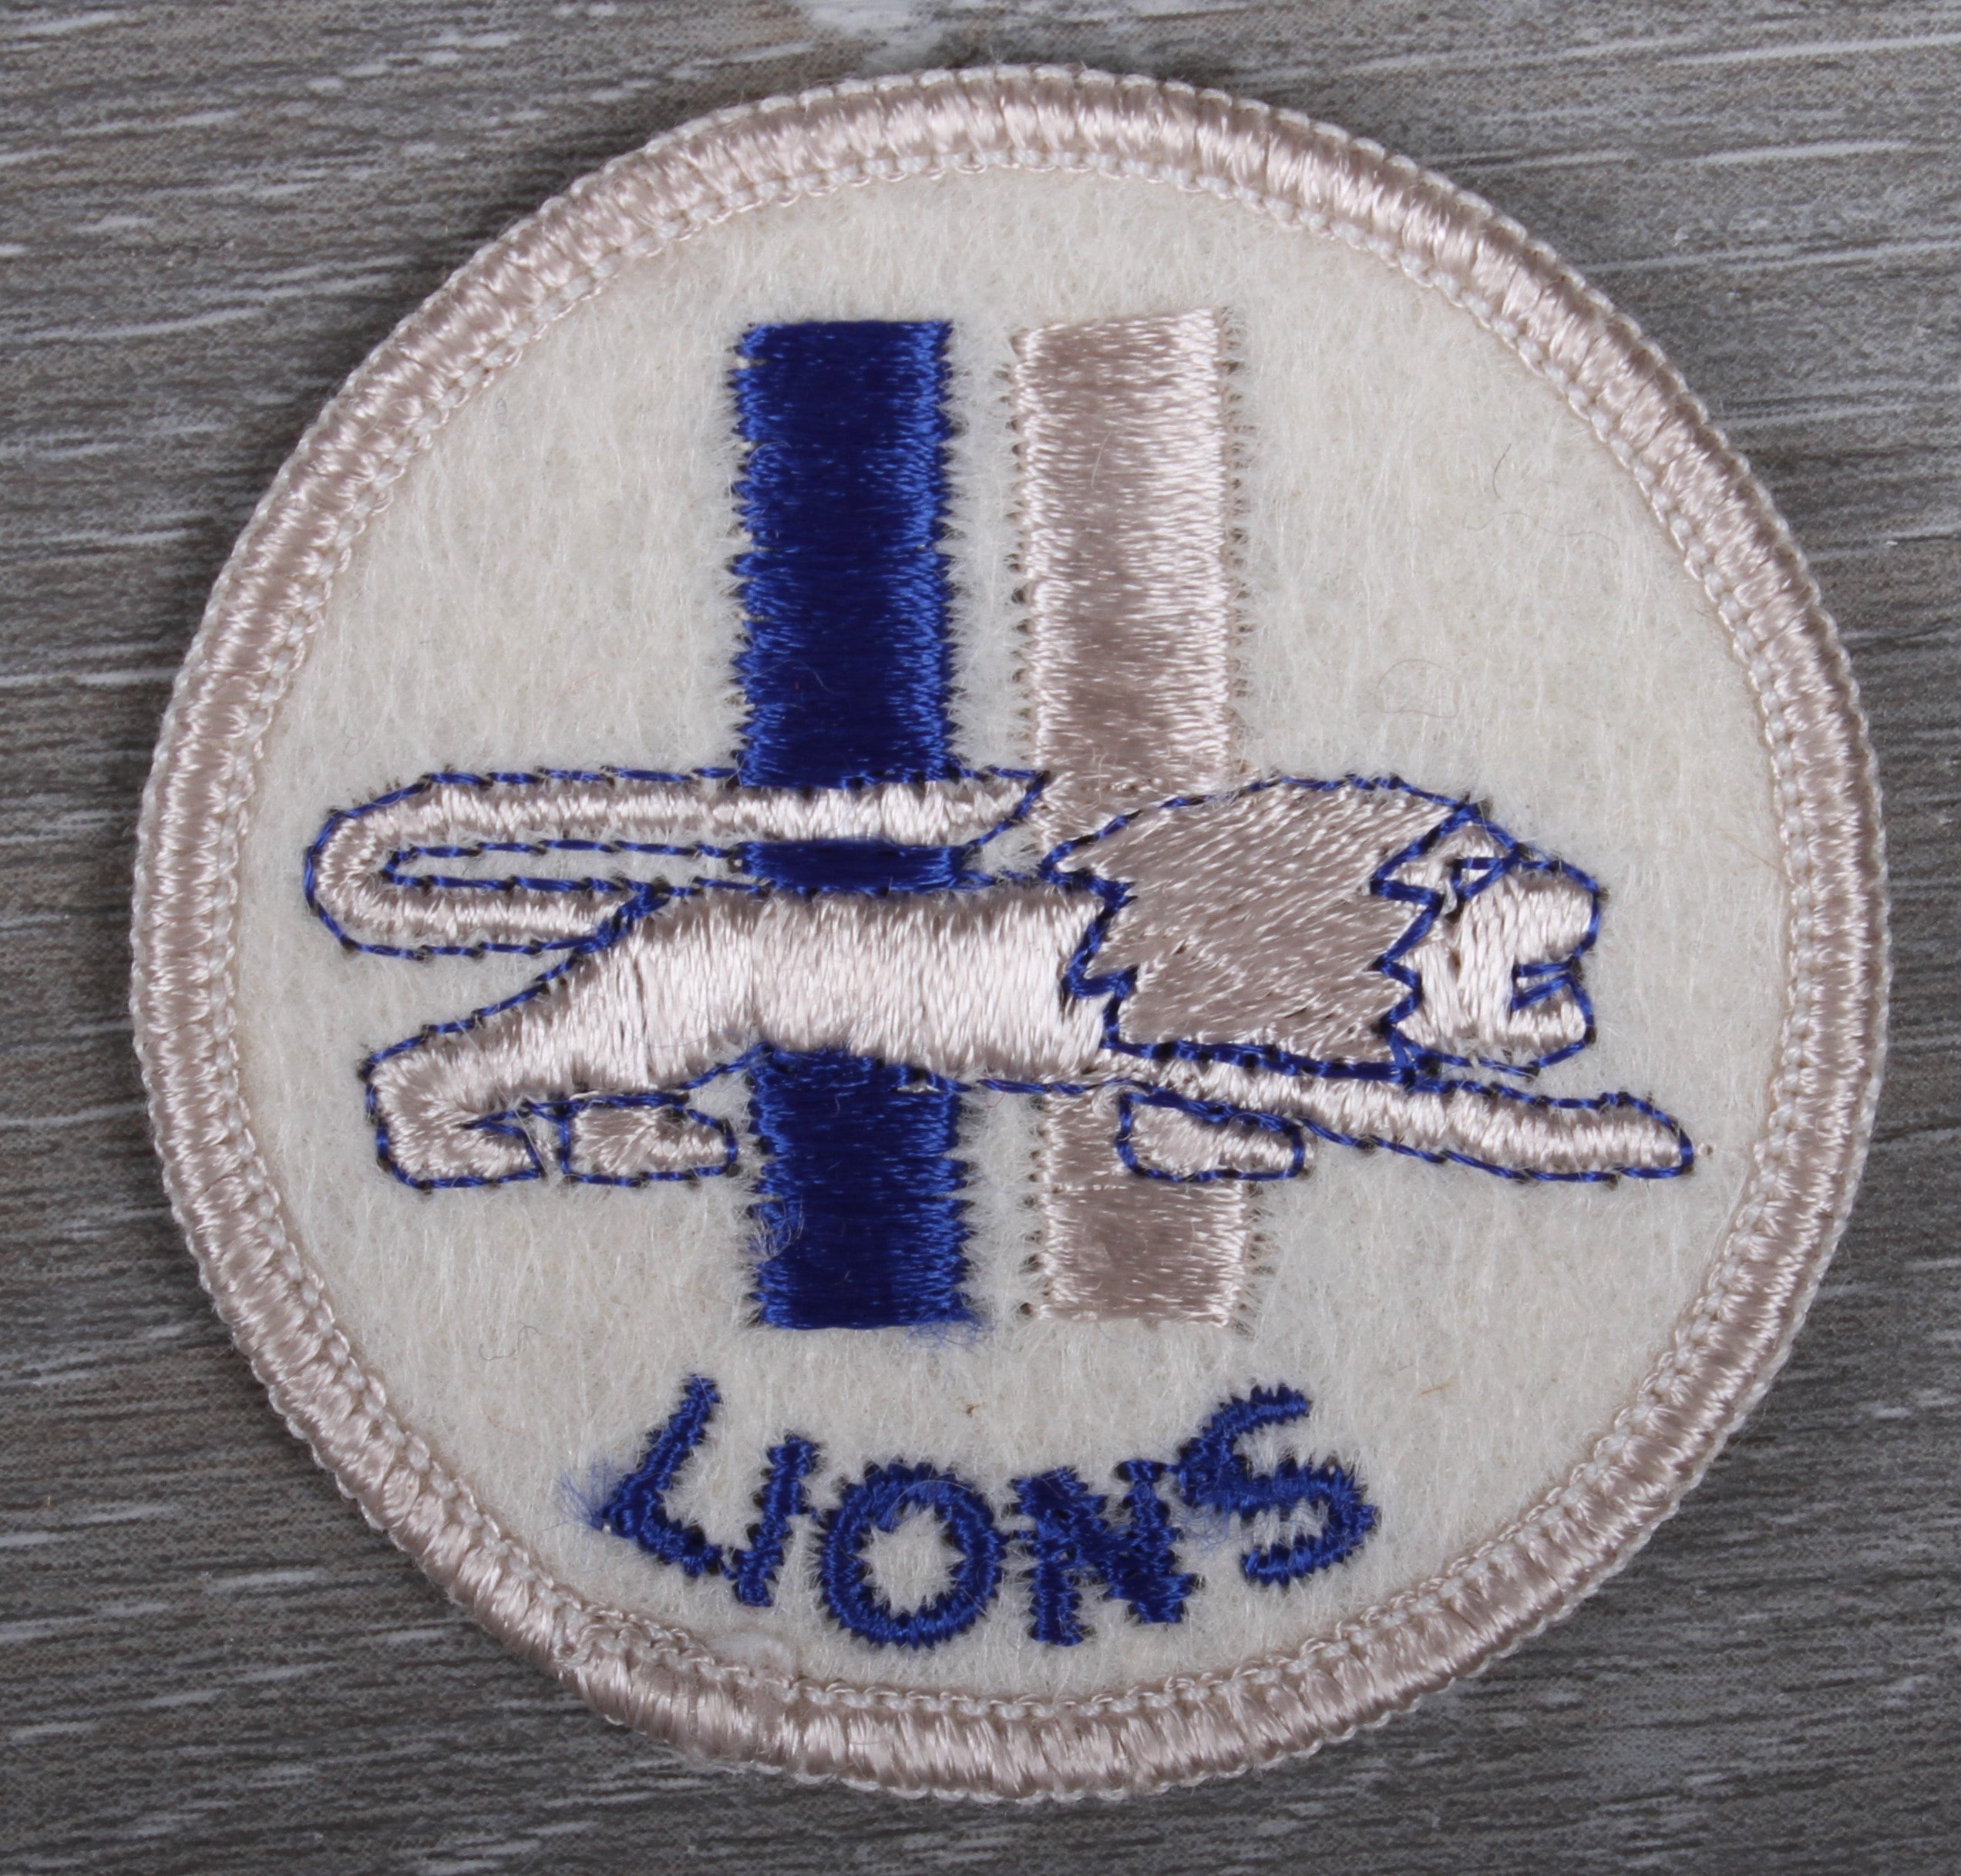 Detroit Lions Iron On Patches